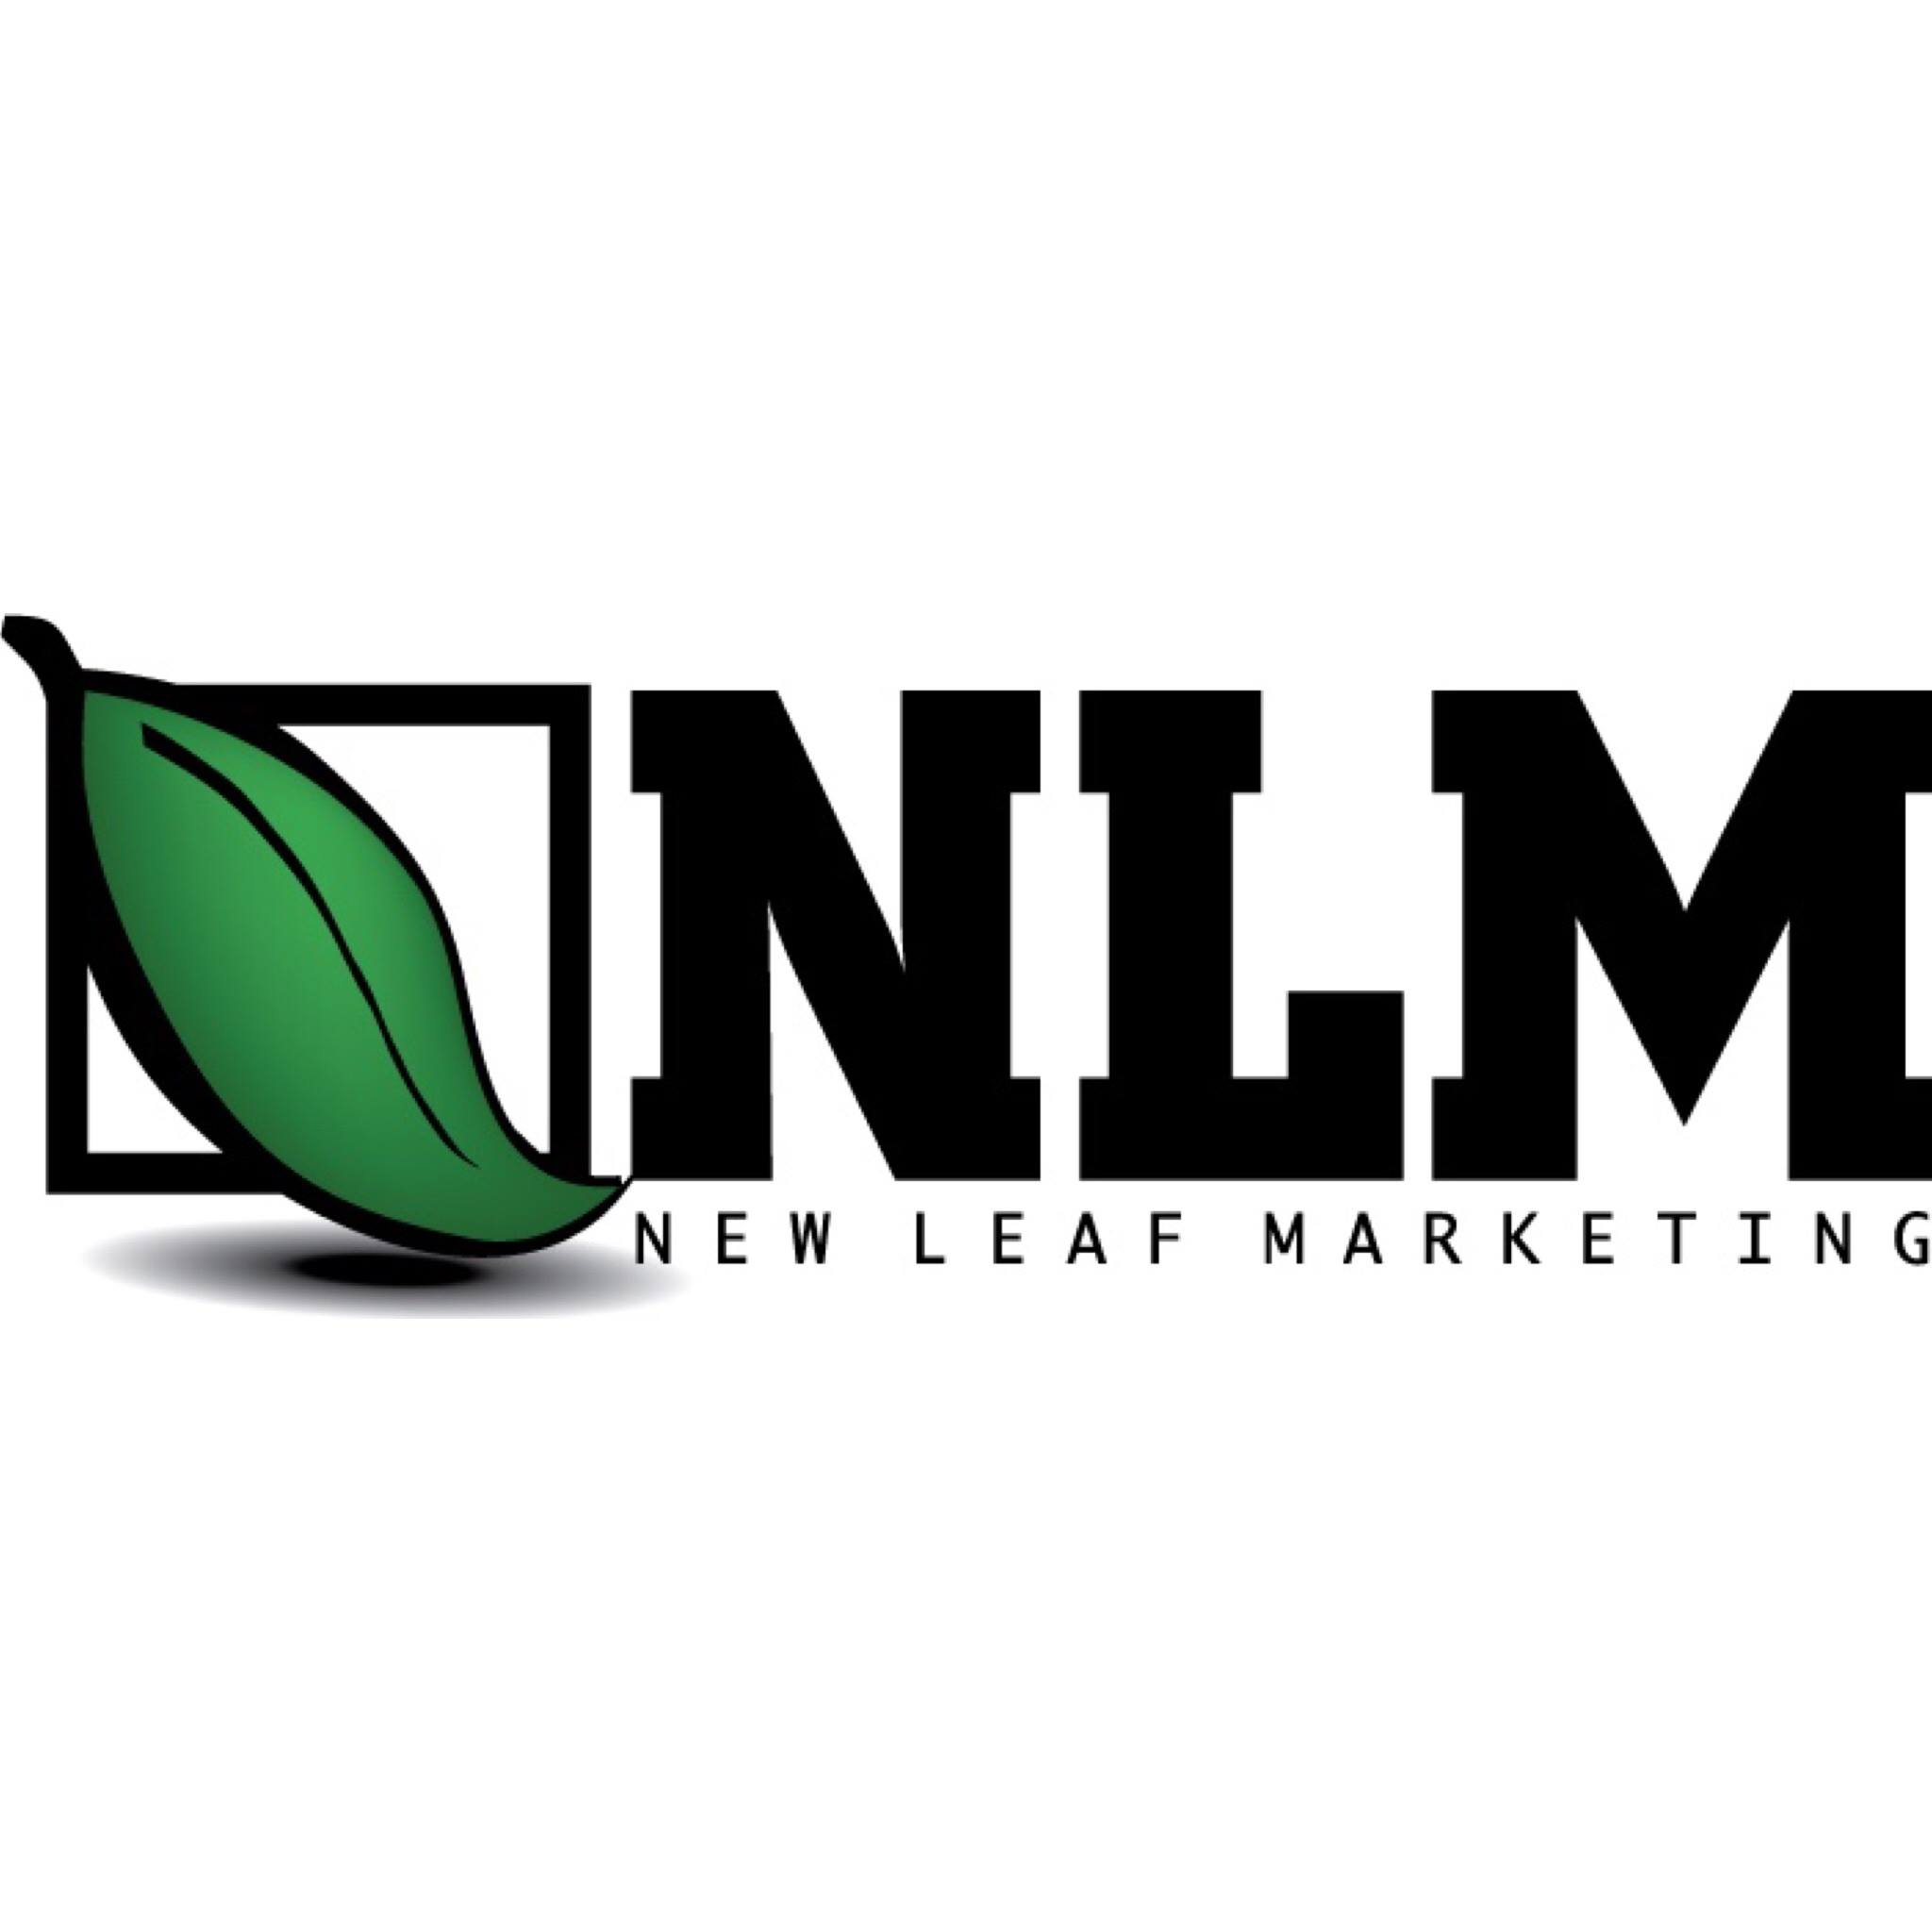 Business logo of New Leaf Marketing